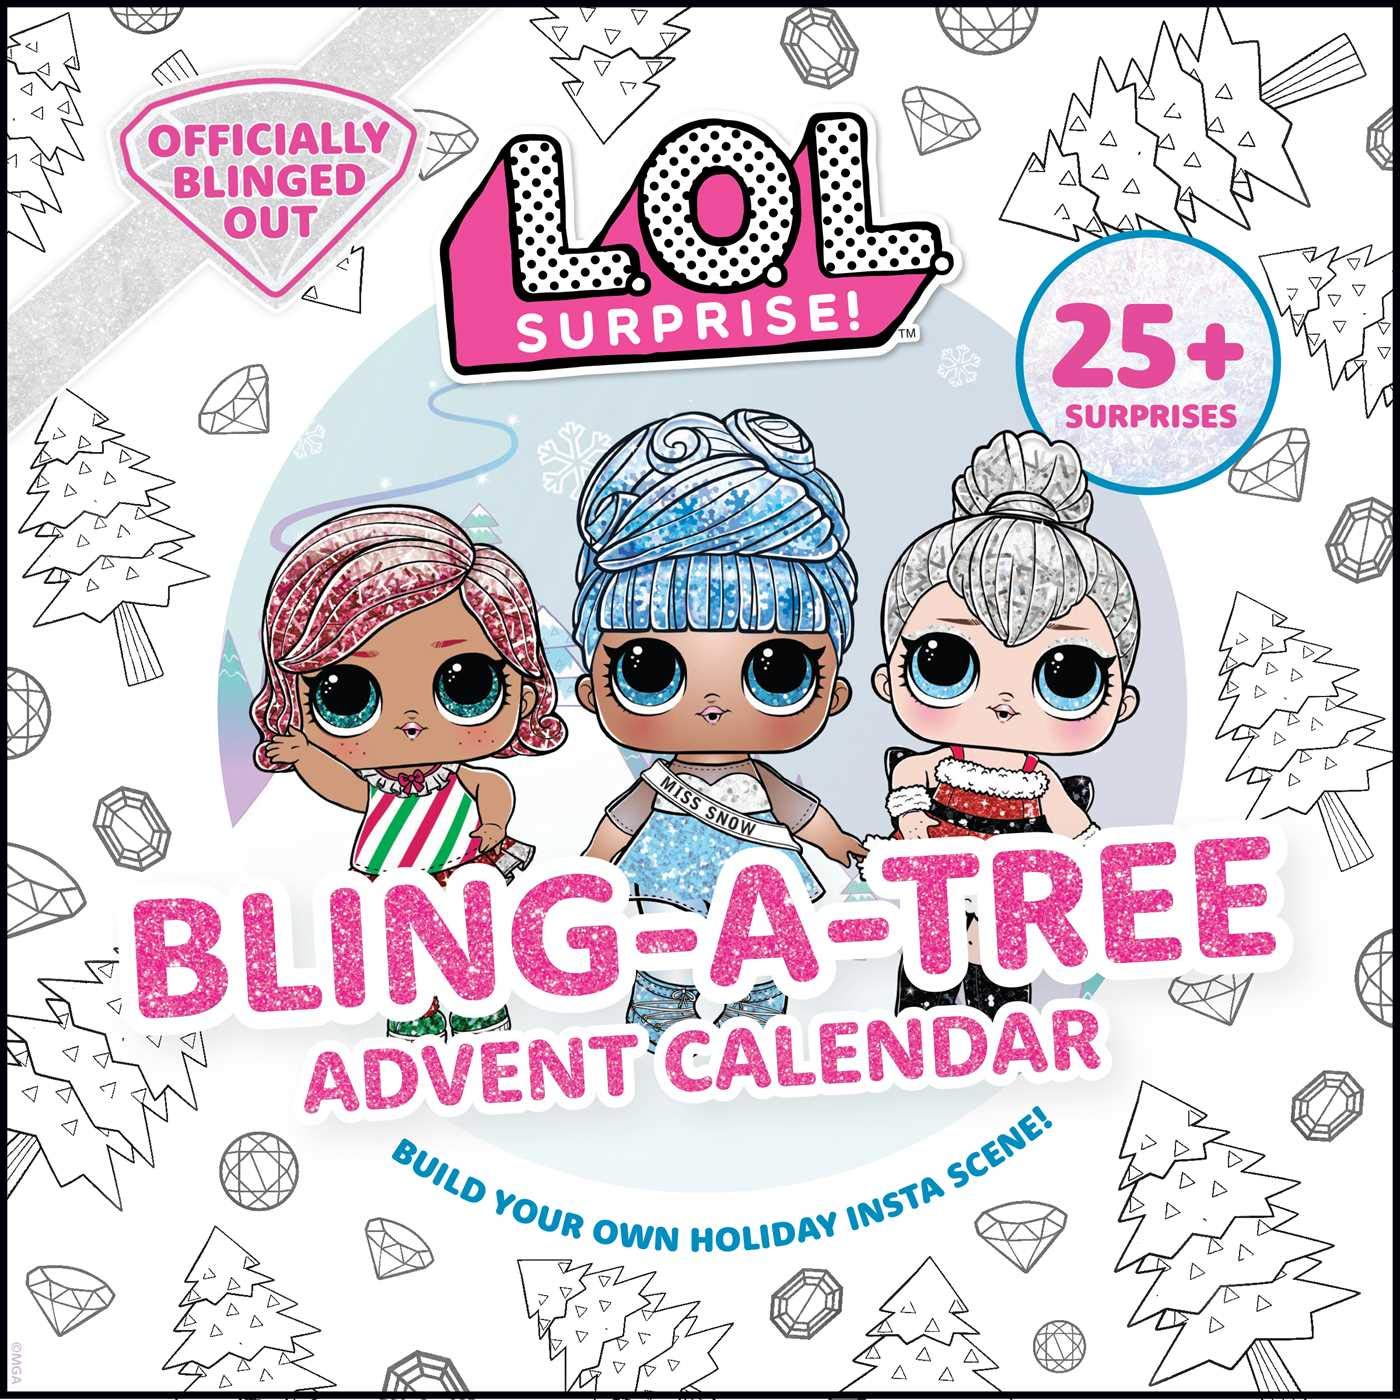 https://www.youloveit.com/uploads/posts/2020-07/1595066811_youloveit_com_lol_surprise_bling-a_tree_advent_calendar04.jpg